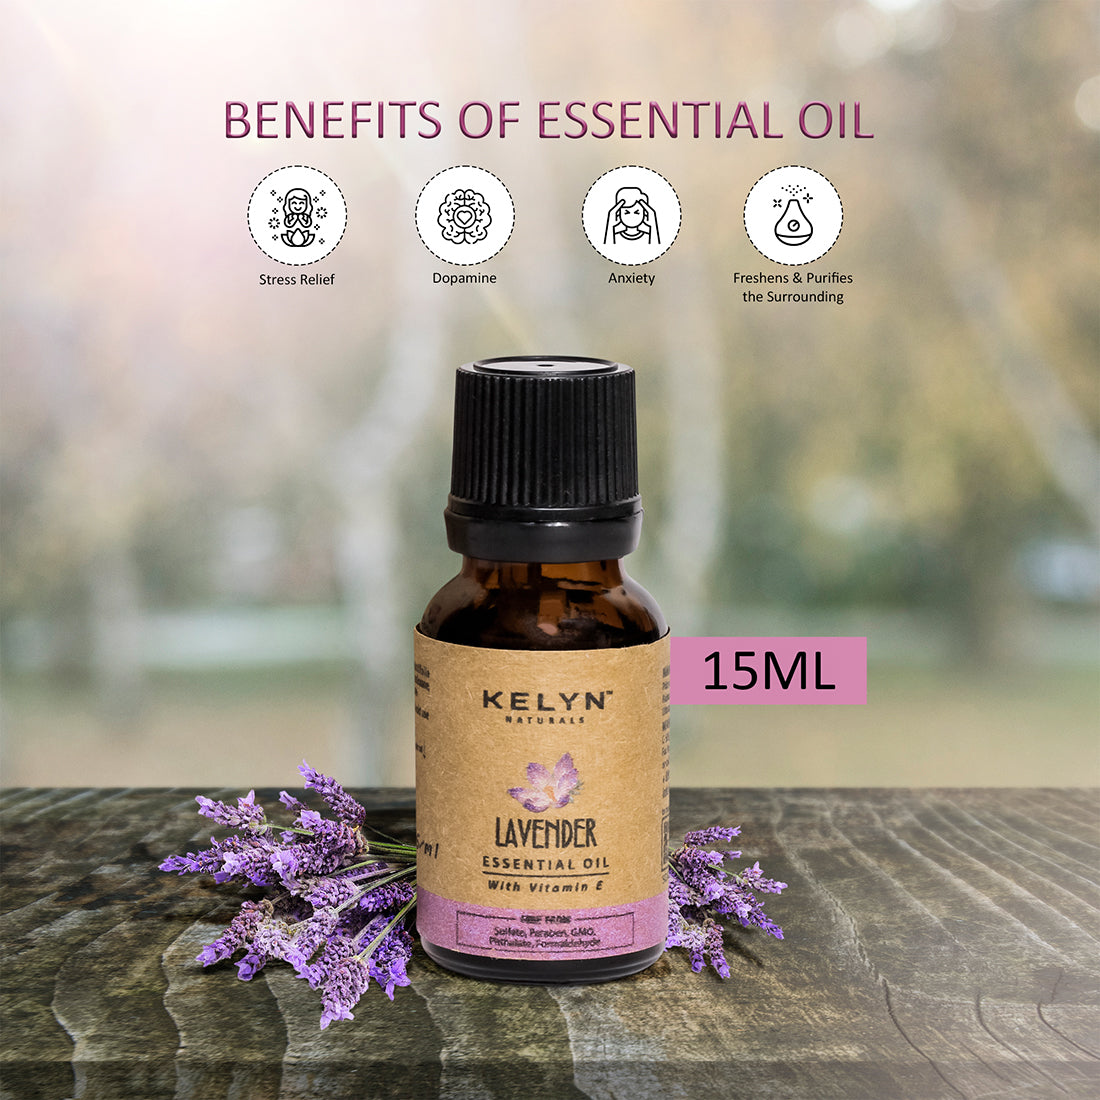 Kelyn Lavender Essential Oil with Vitamin E - 15ml